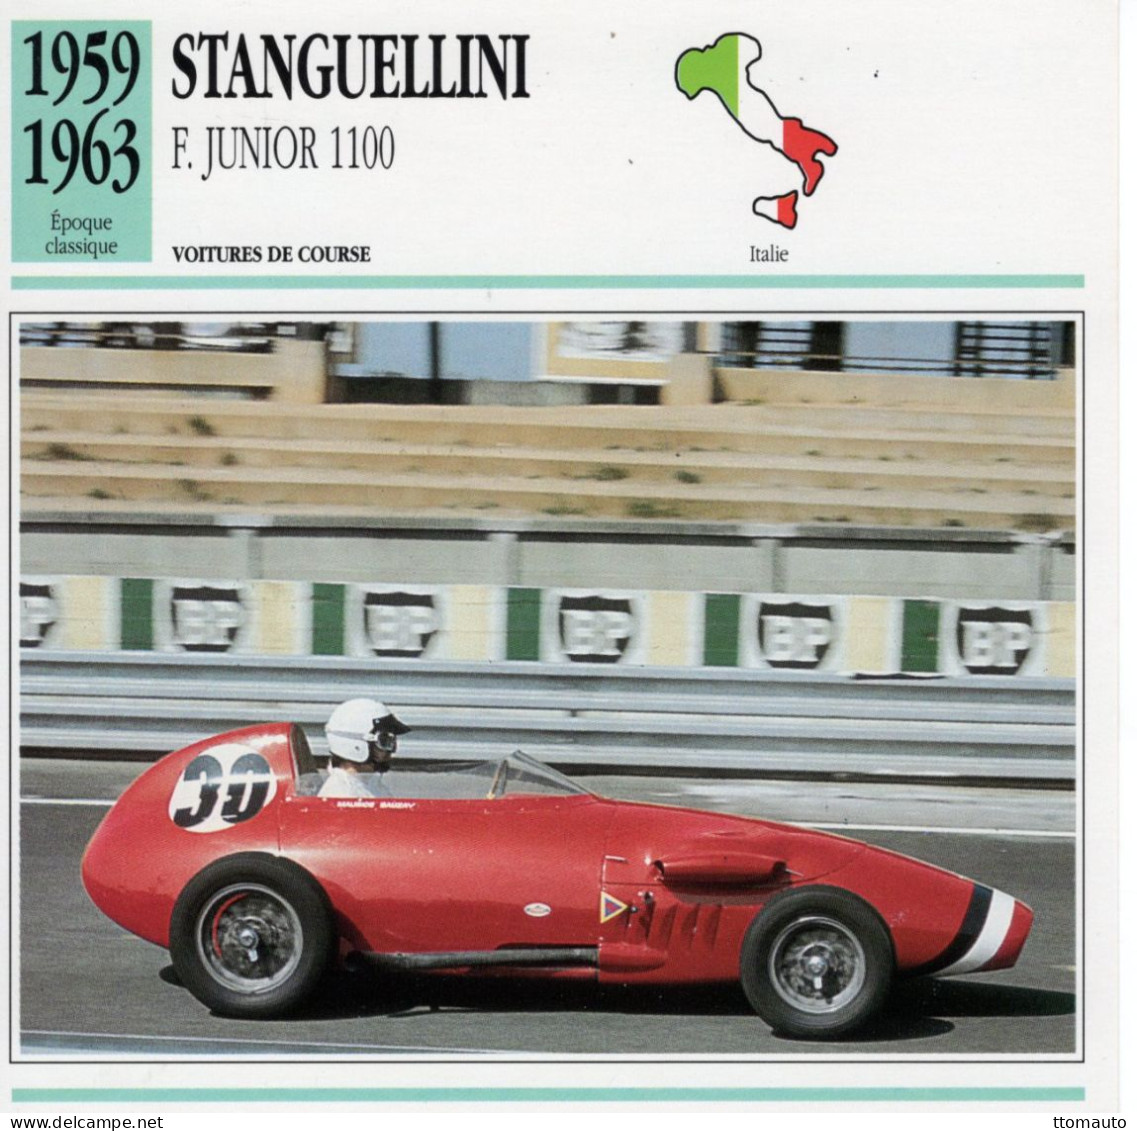 Stanguellini Formula Junior 1100 -  1960  - Voiture De Course -  Fiche Technique Automobile (I) - Automobili